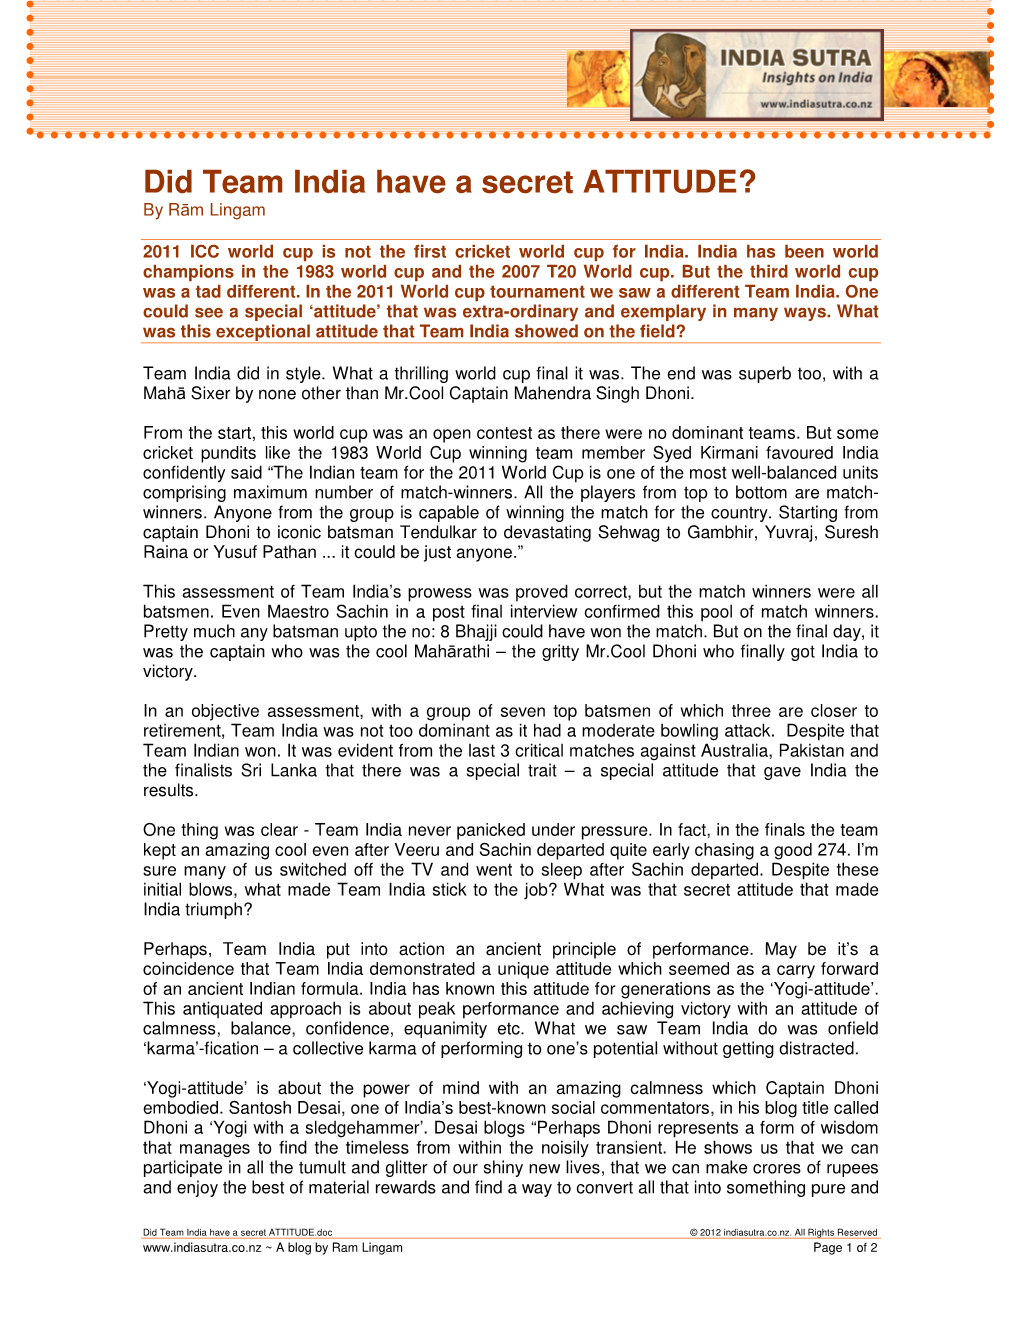 Did Team India Have a Secret ATTITUDE? by R Ām Lingam